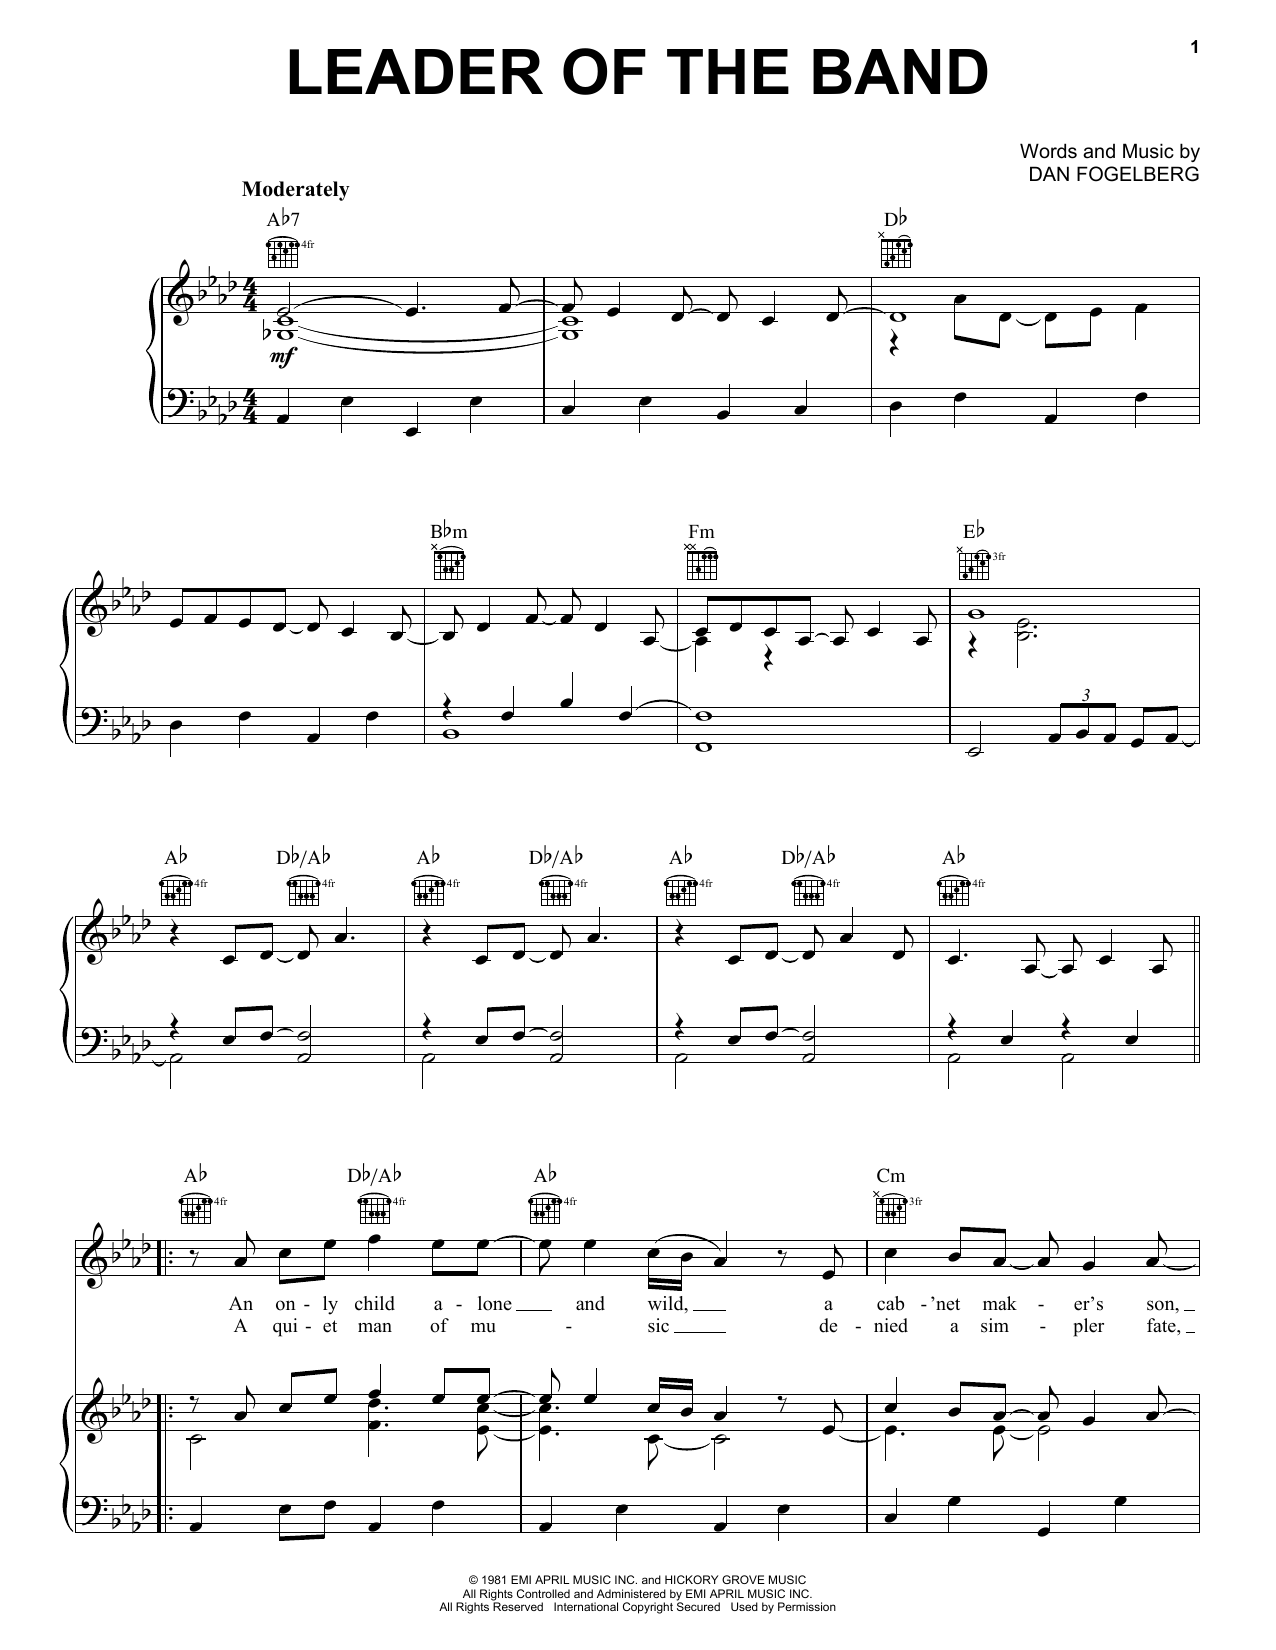 Dan Fogelberg Leader Of The Band Sheet Music Notes & Chords for Lyrics & Piano Chords - Download or Print PDF